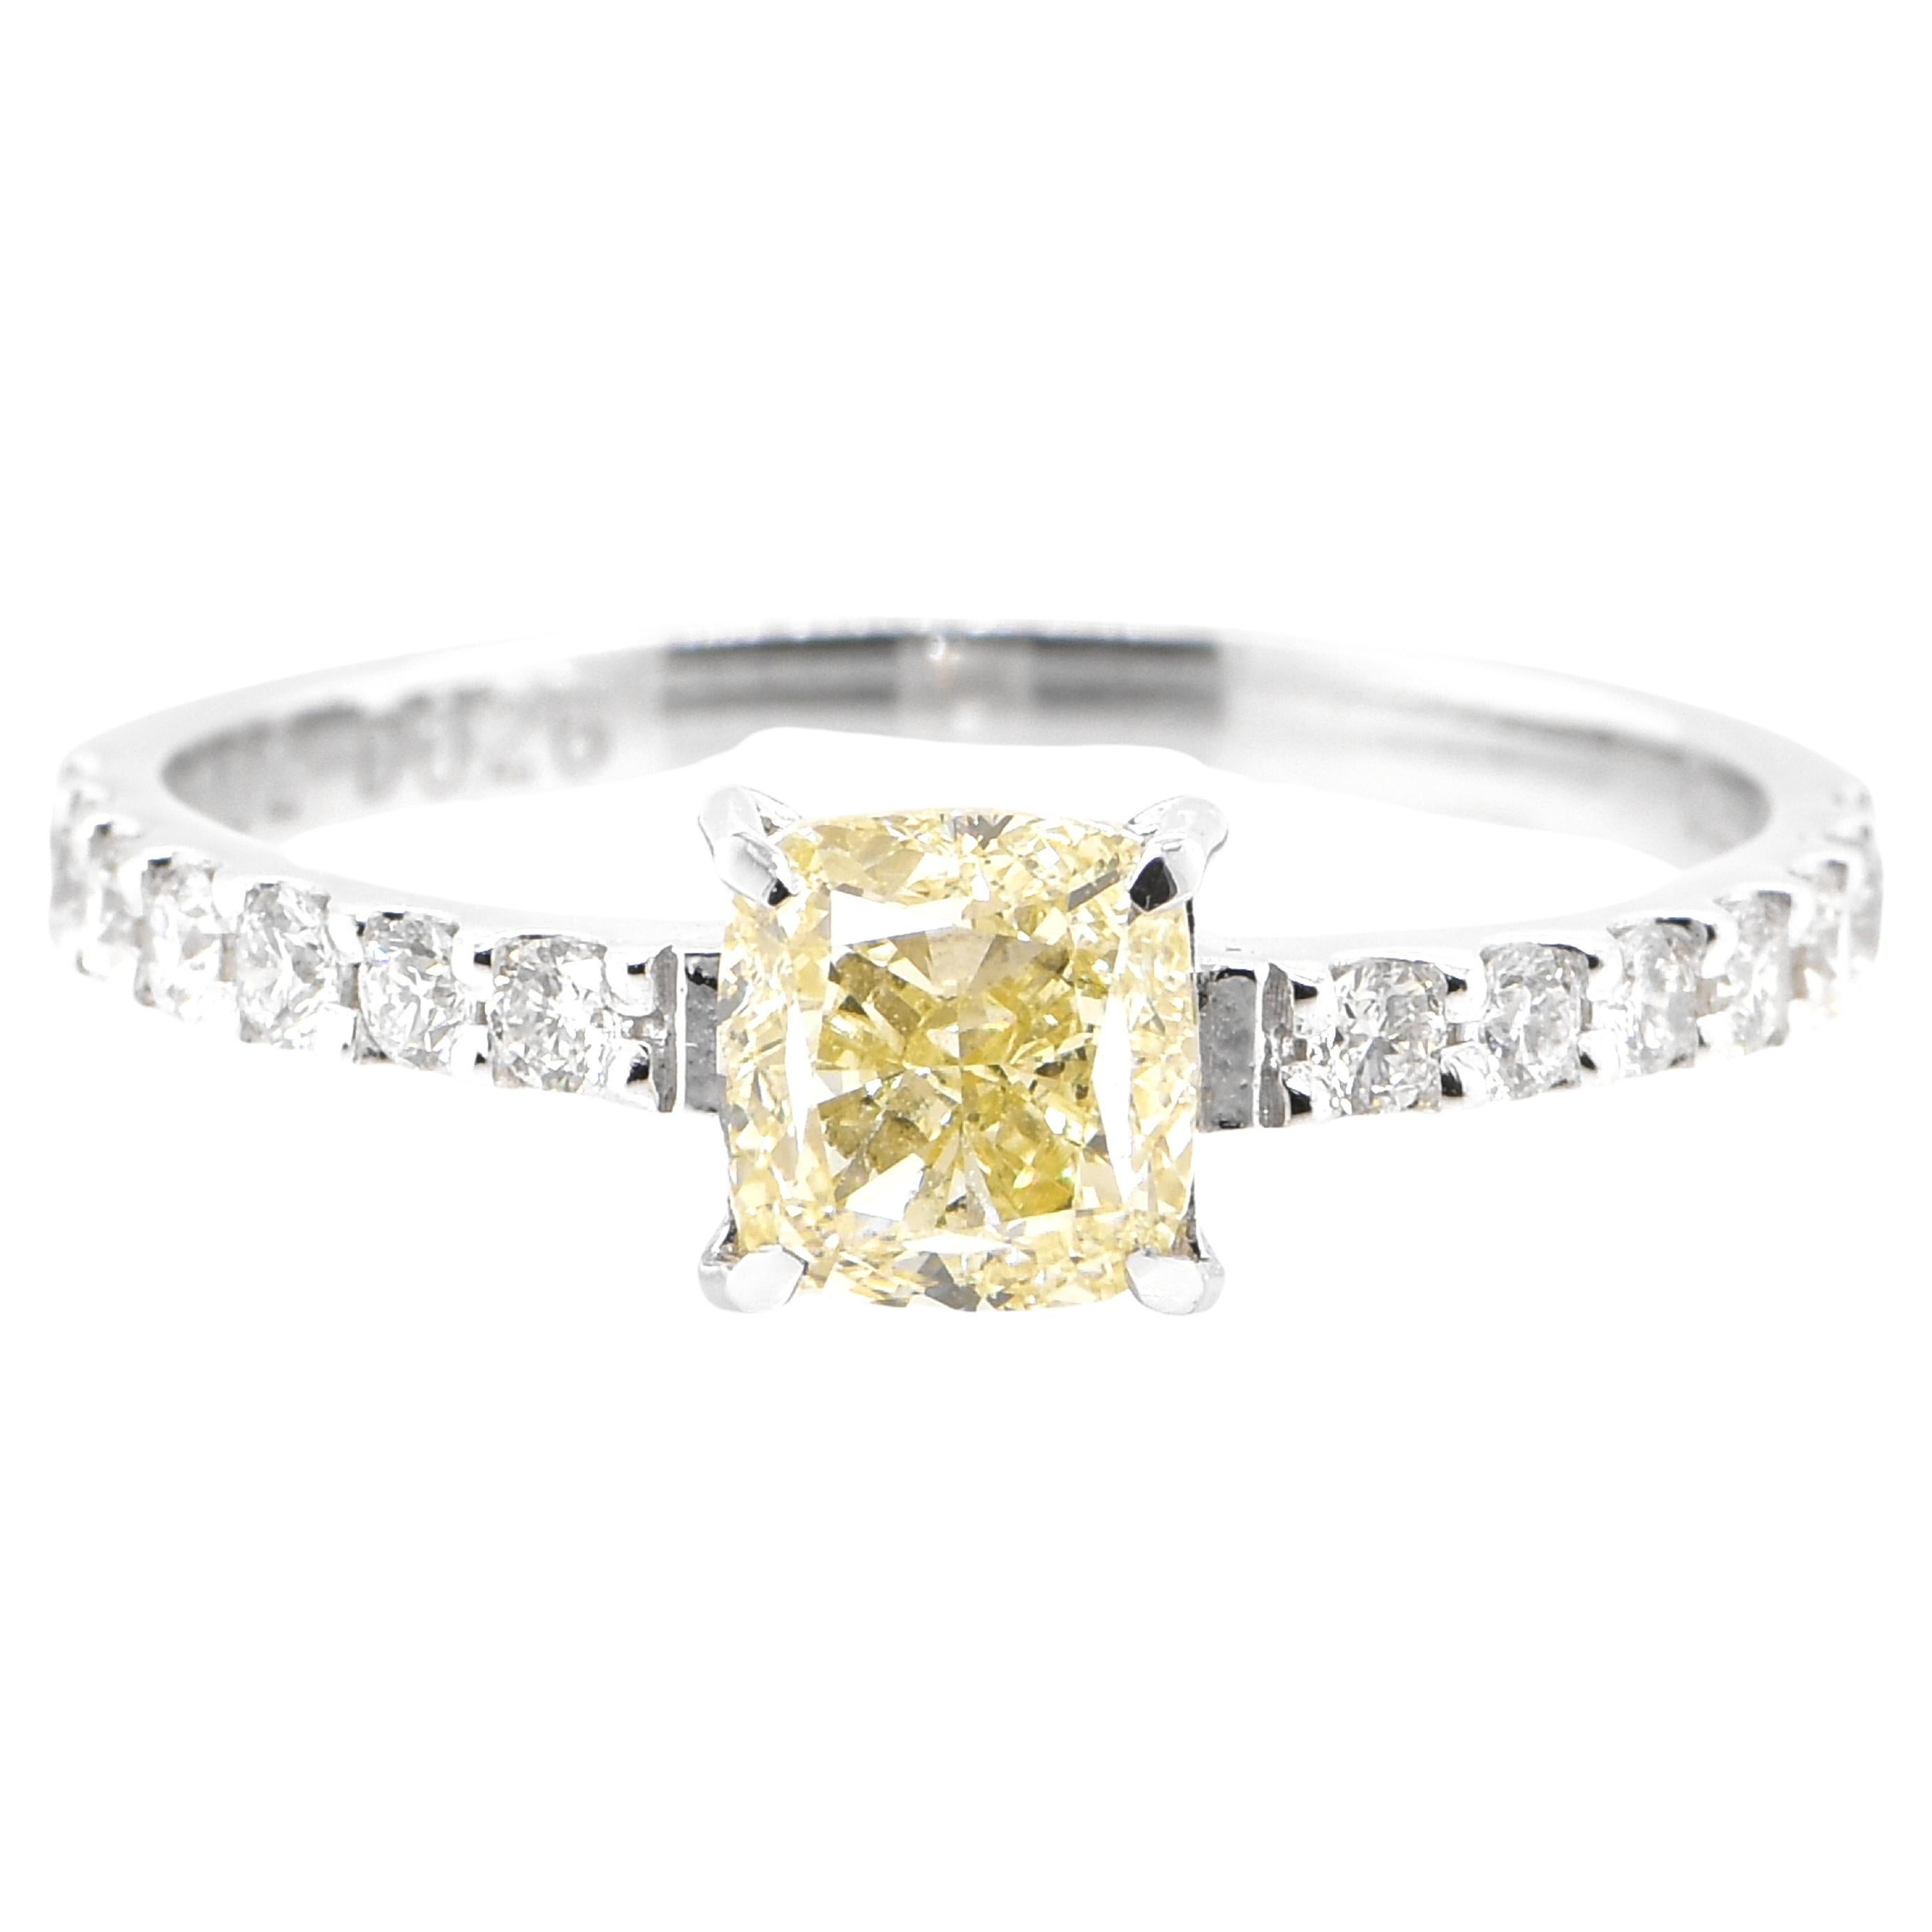 1.002 Carat, VS-1, Light Yellow, Earth-Mined Diamond Ring made in Platinum